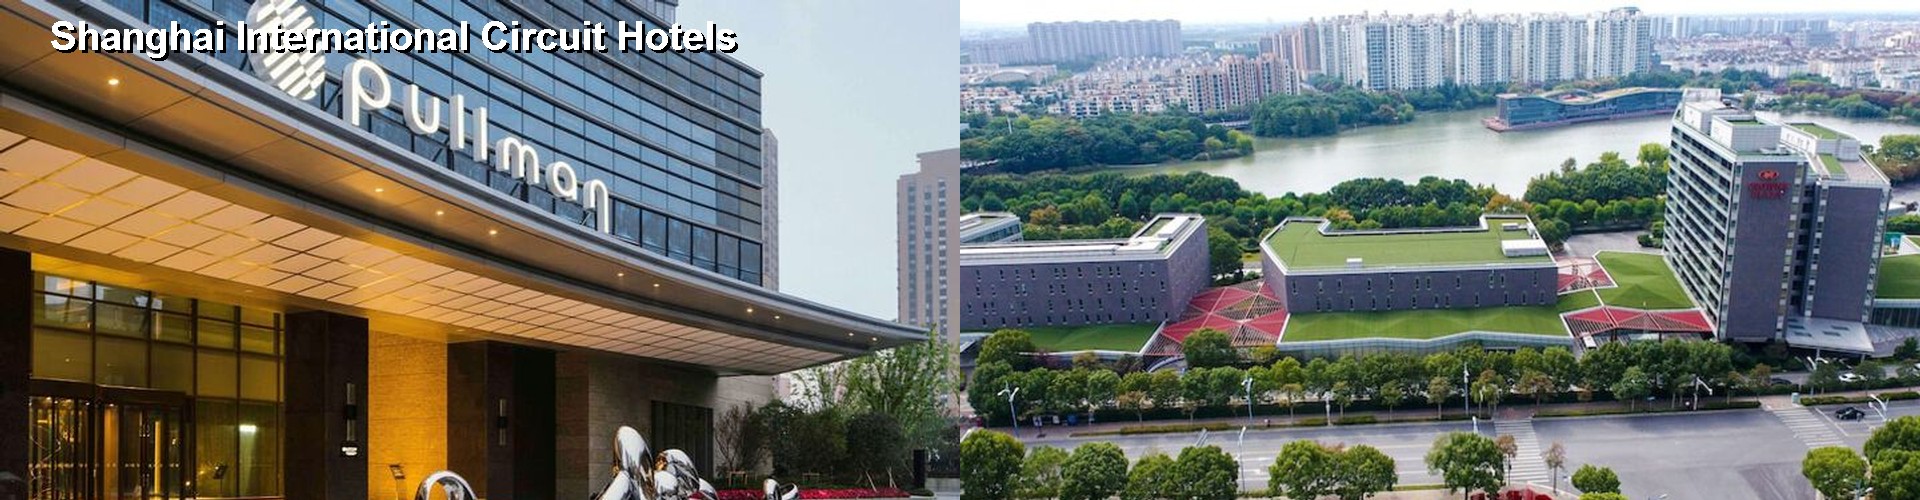 5 Best Hotels near Shanghai International Circuit